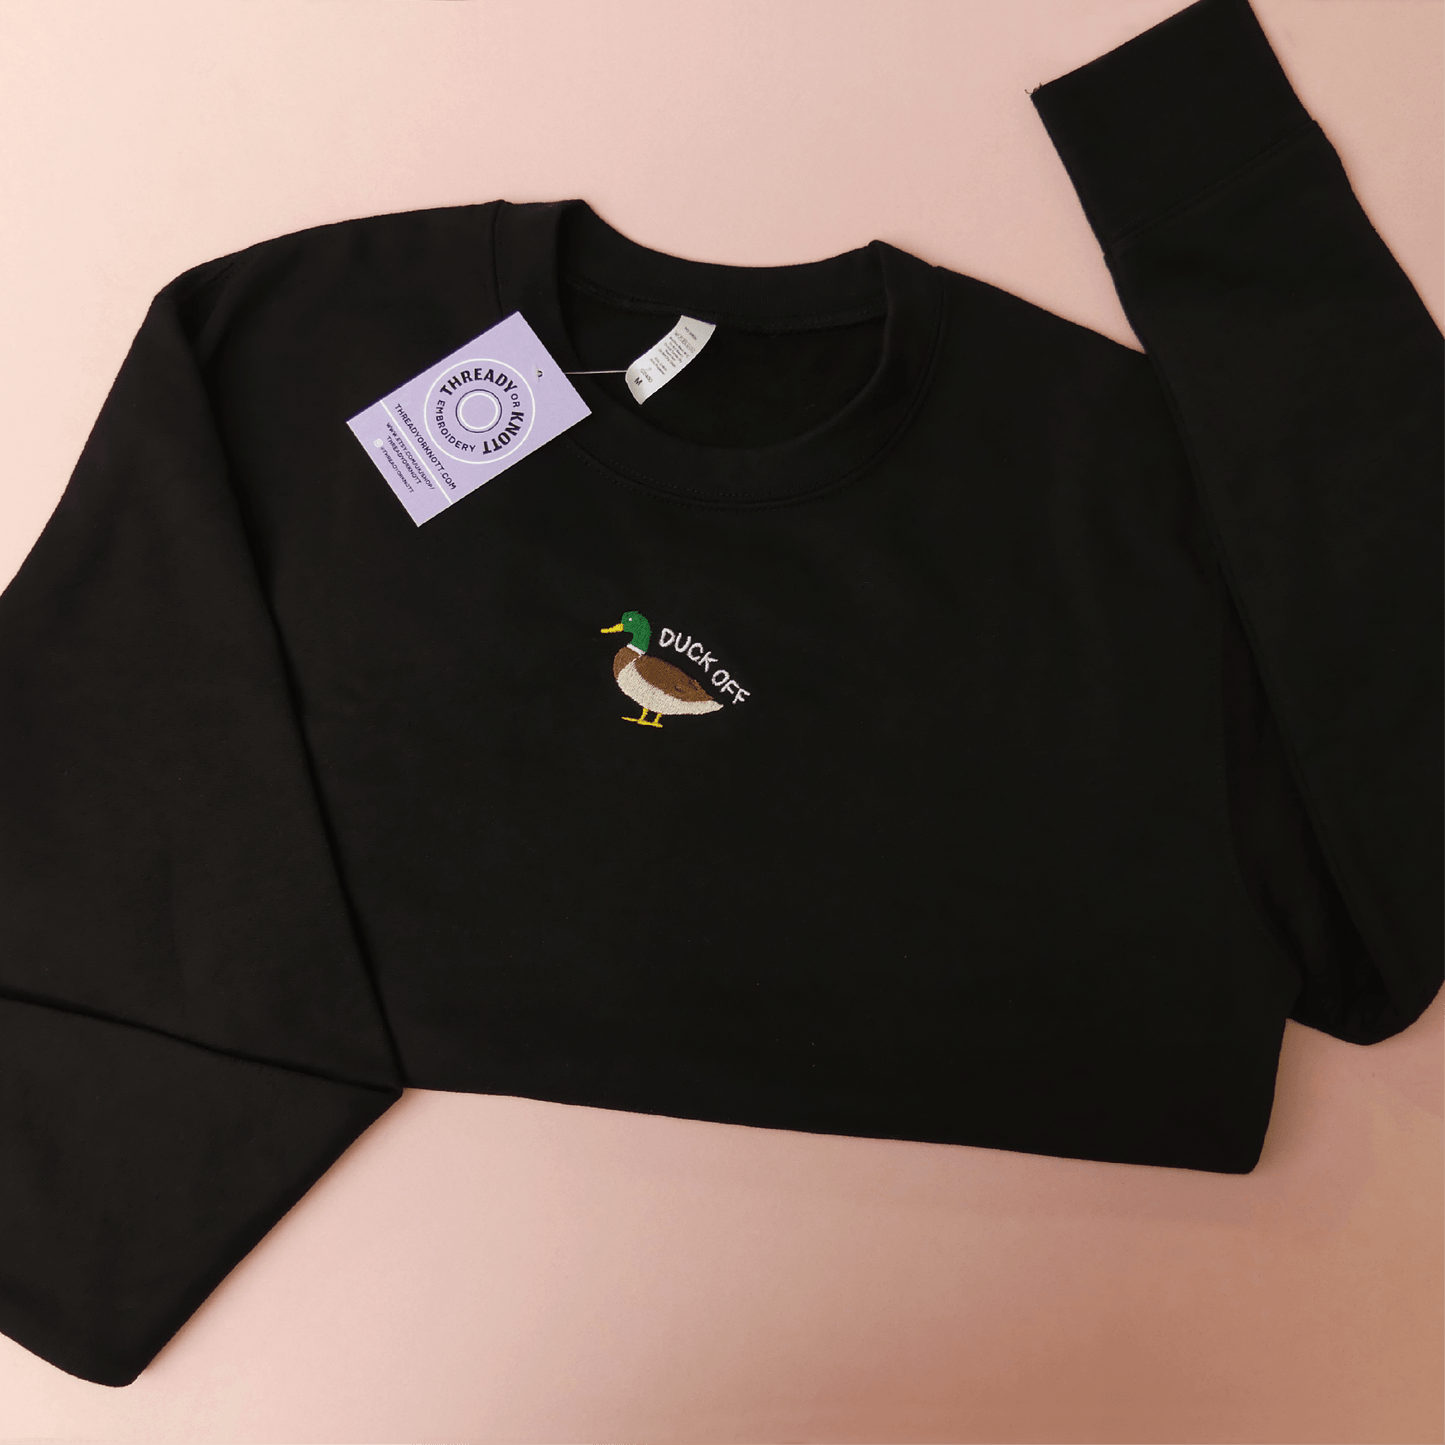 Duck Off Embroidered Crewneck Sweatshirt